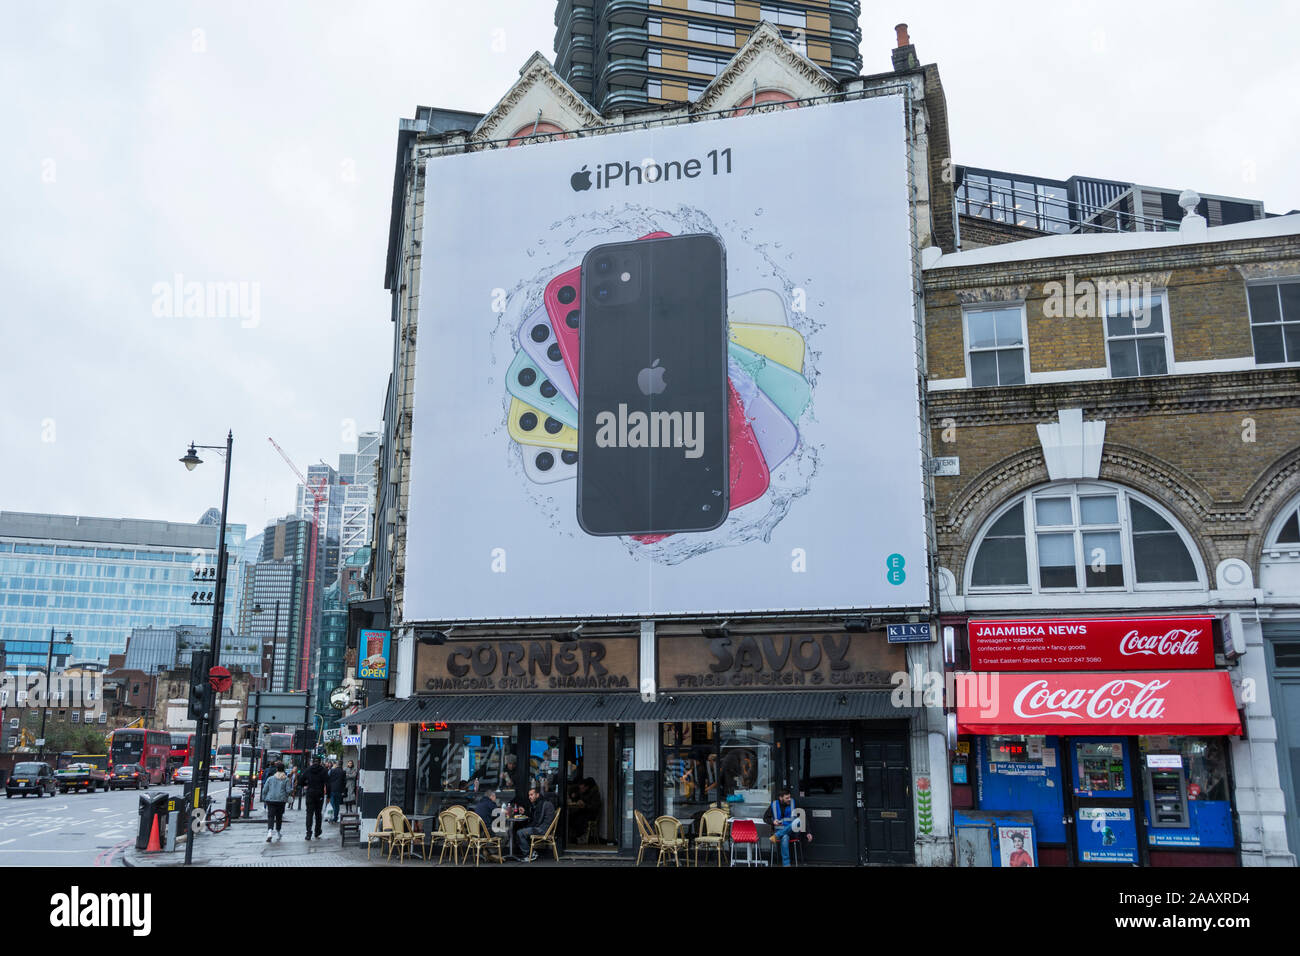 Apple iPhone 11 billboard in Shoreditch, City of London, UK Stock Photo